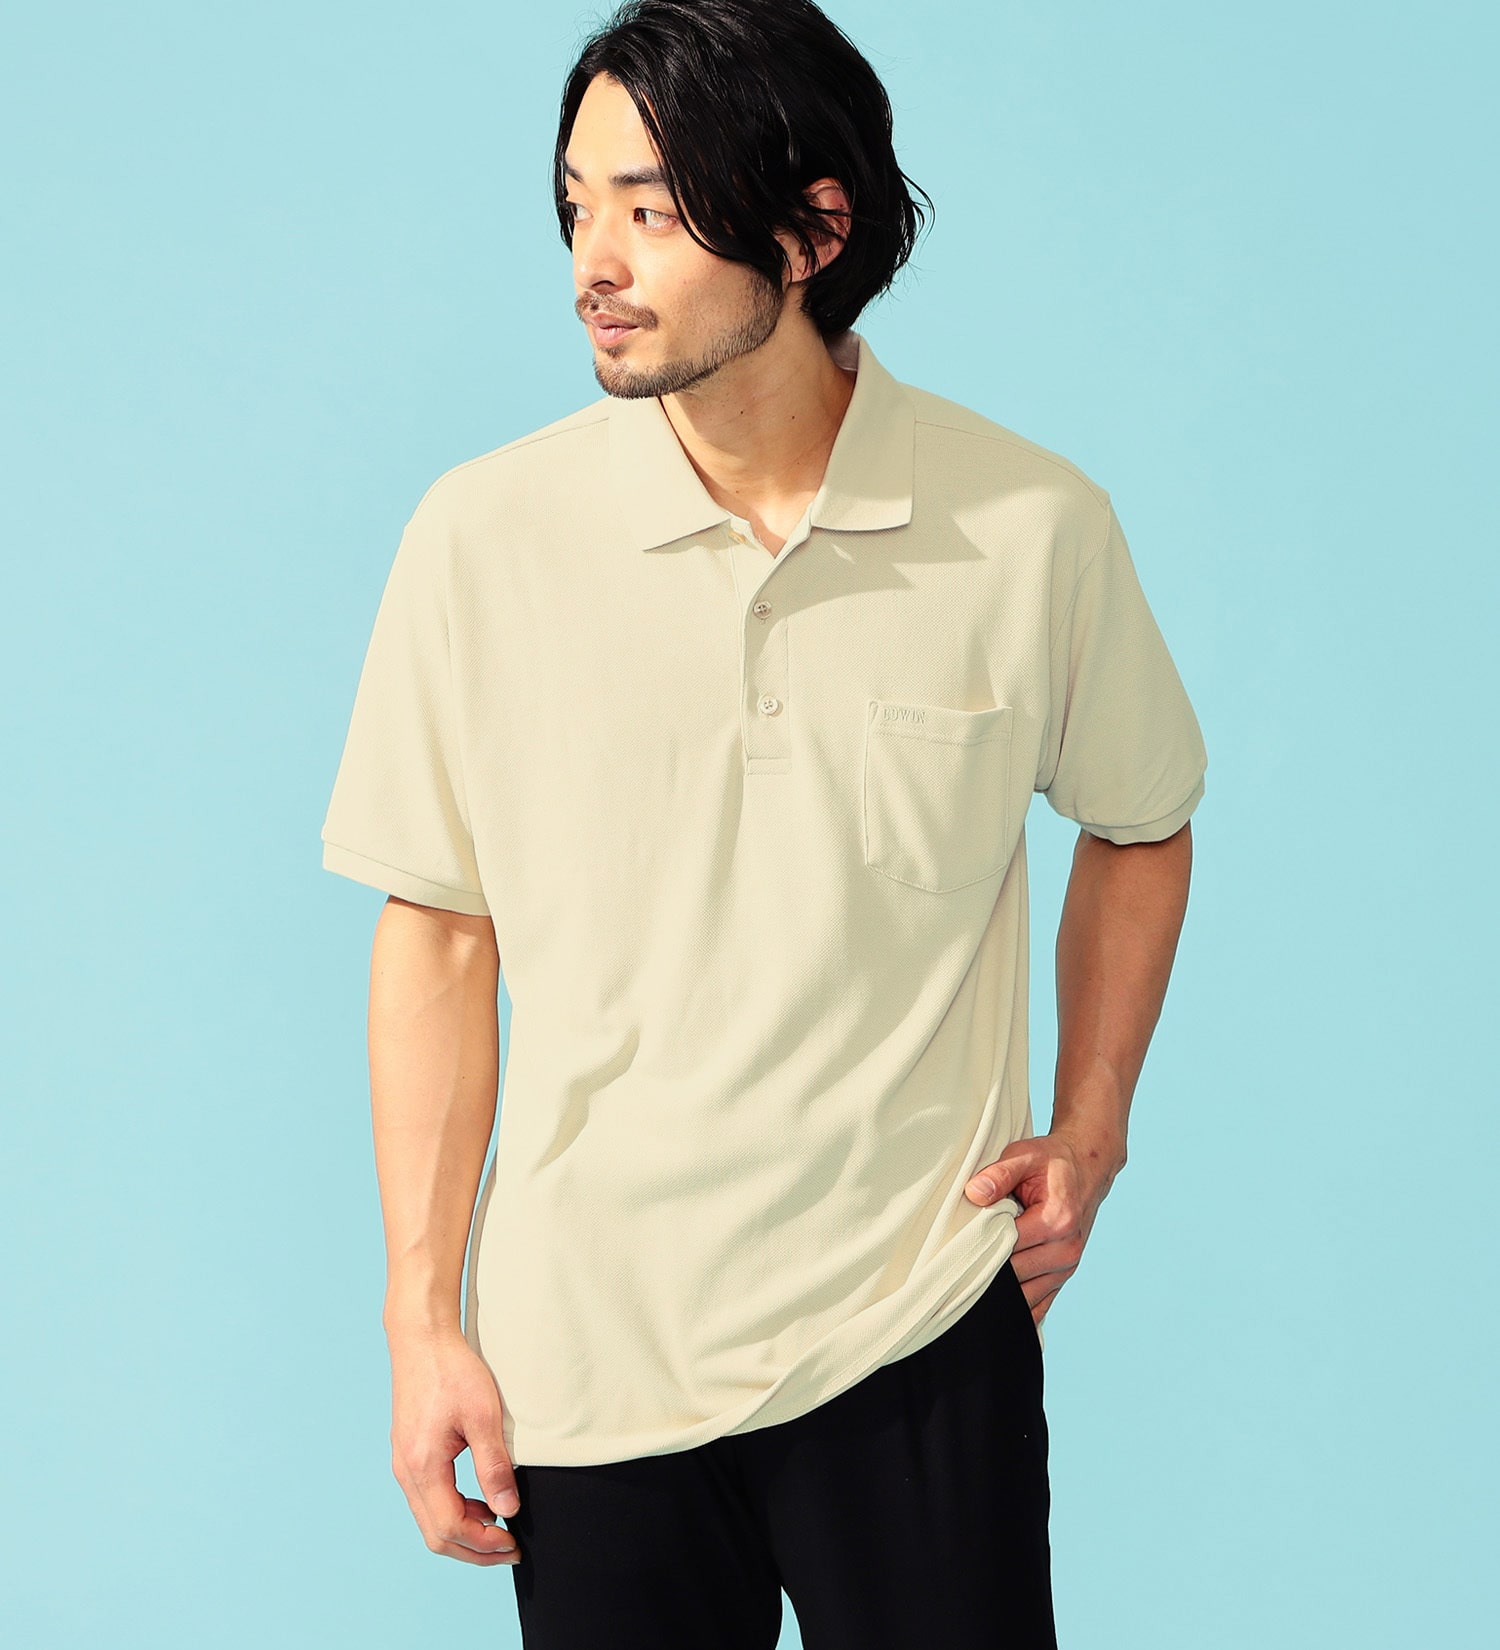 EDWIN(エドウイン)のCOOL FLEX レイシールド ポロシャツ 半袖|トップス/ポロシャツ/メンズ|ベージュ